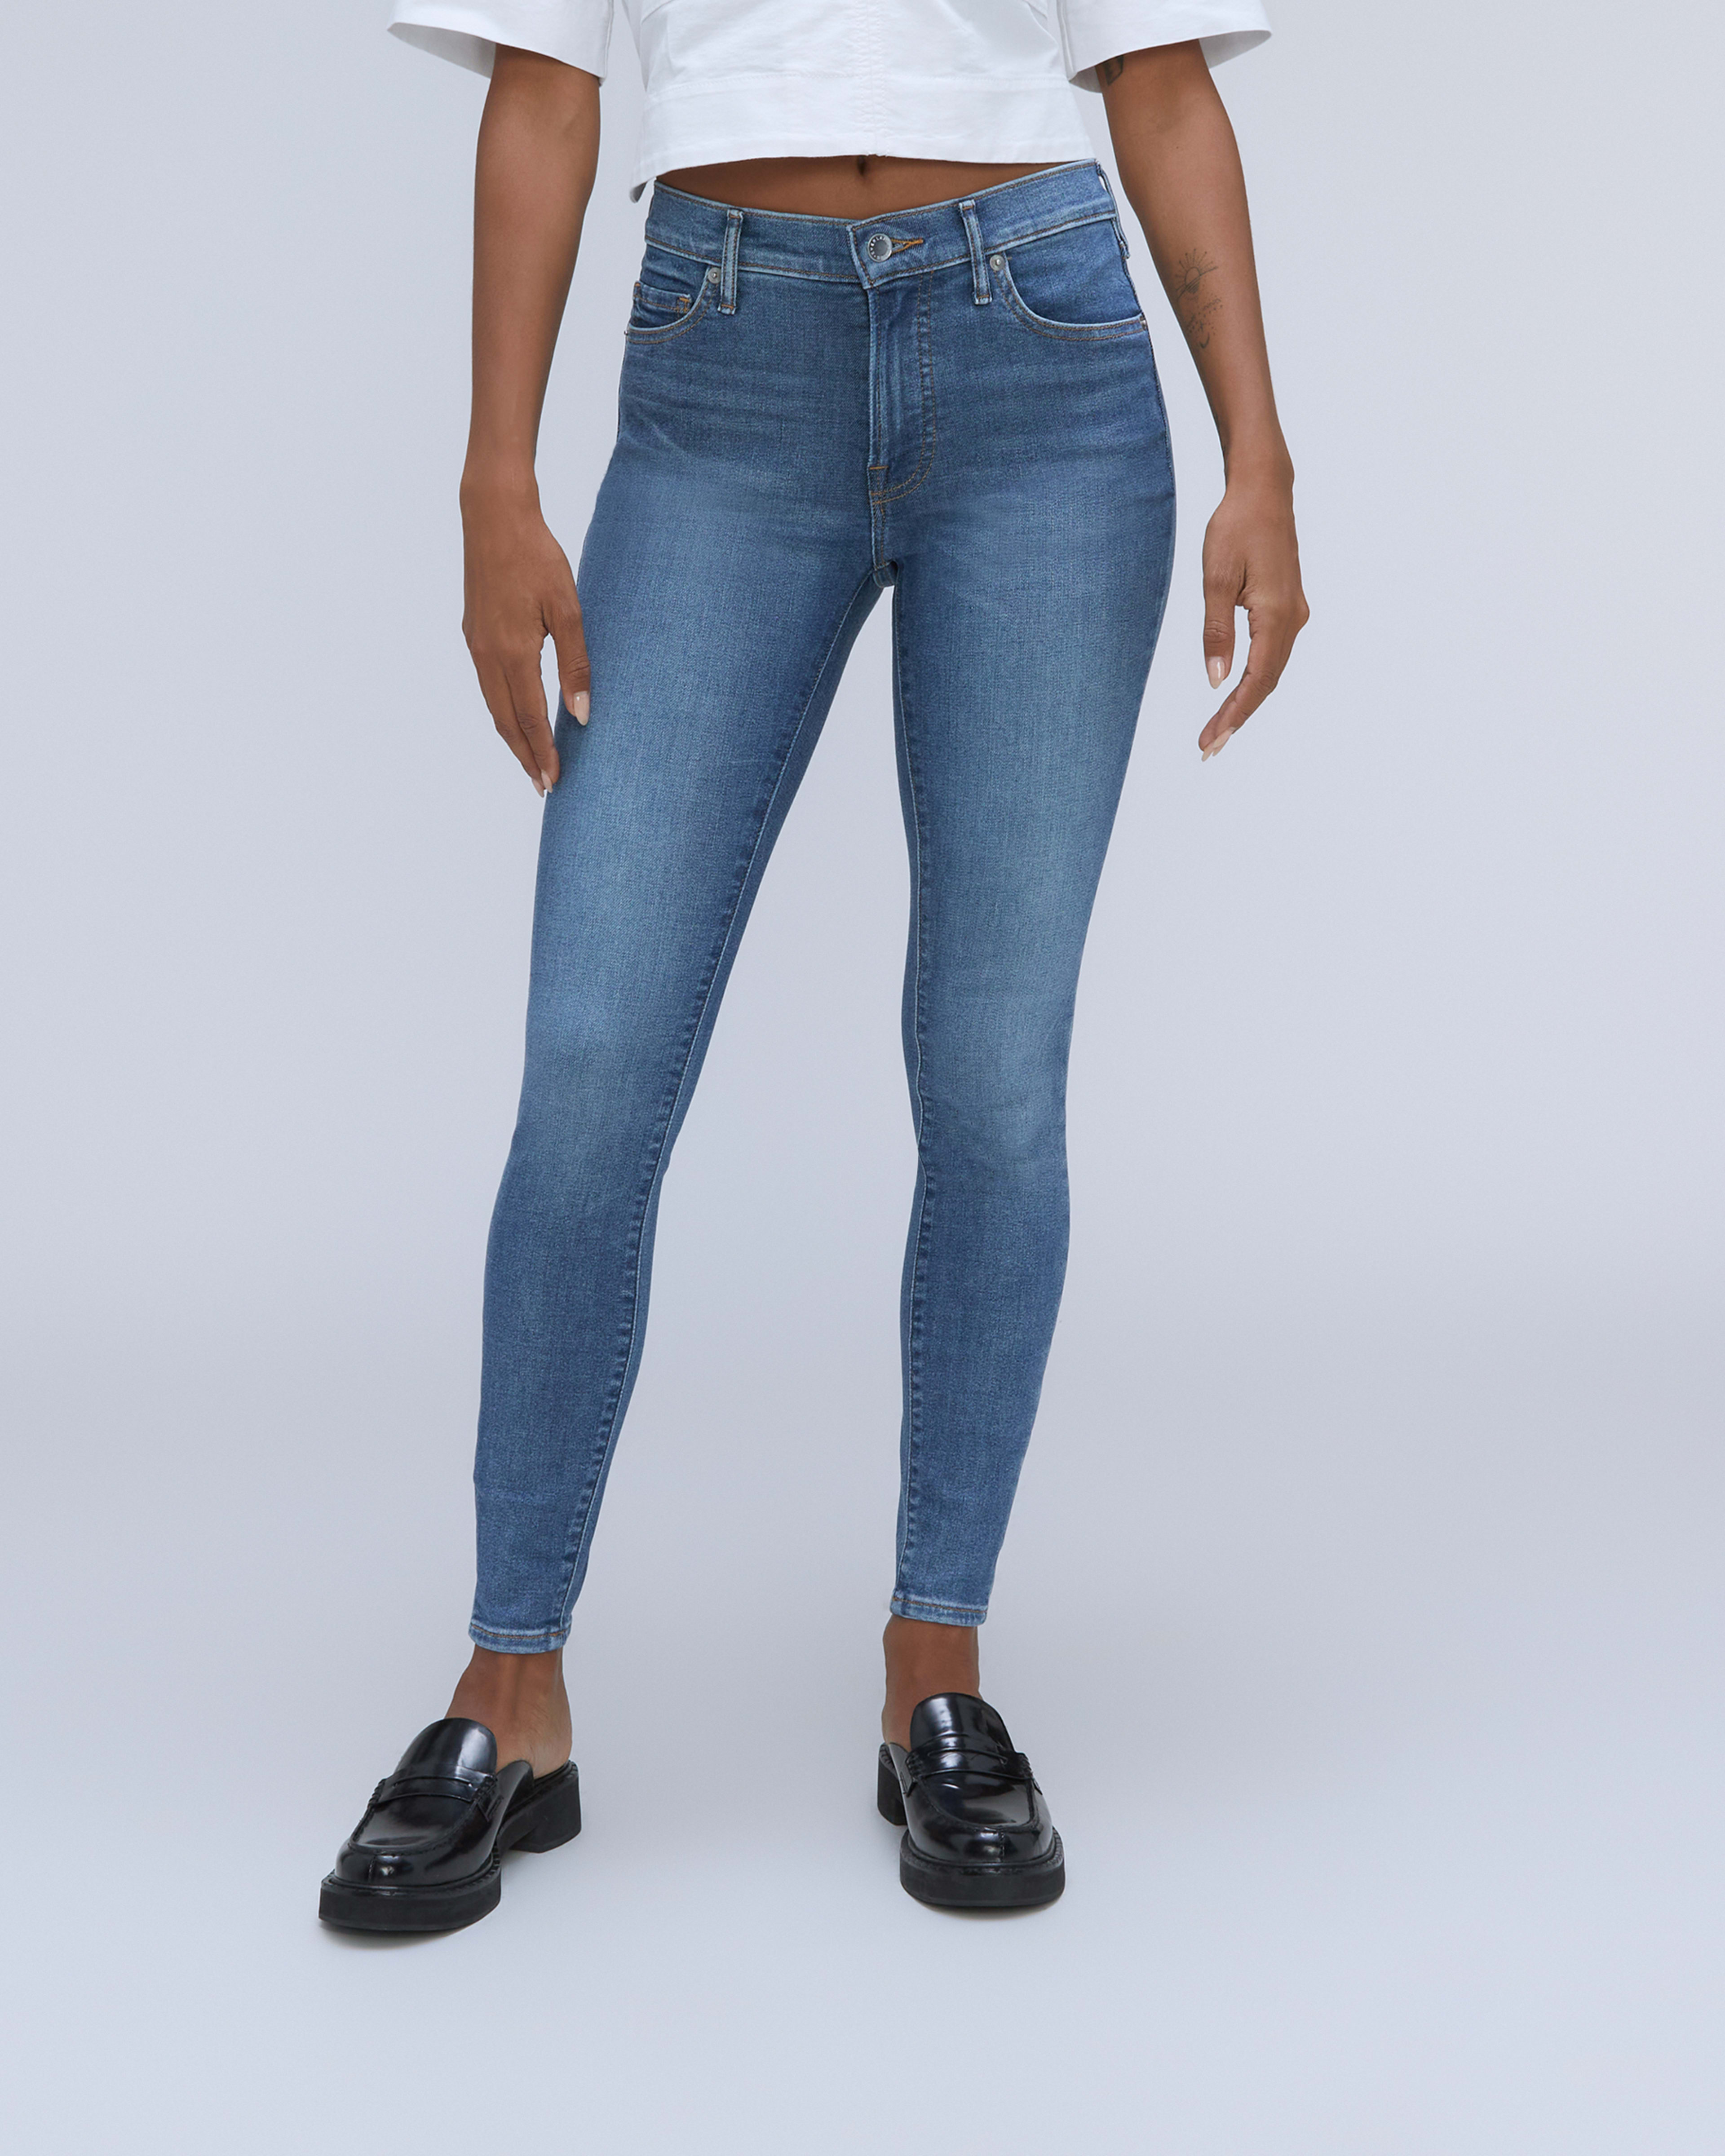 Basic Editions, Jeans, Size 4 Basic Editions Womens Dark Blue Jean Denim  Pants